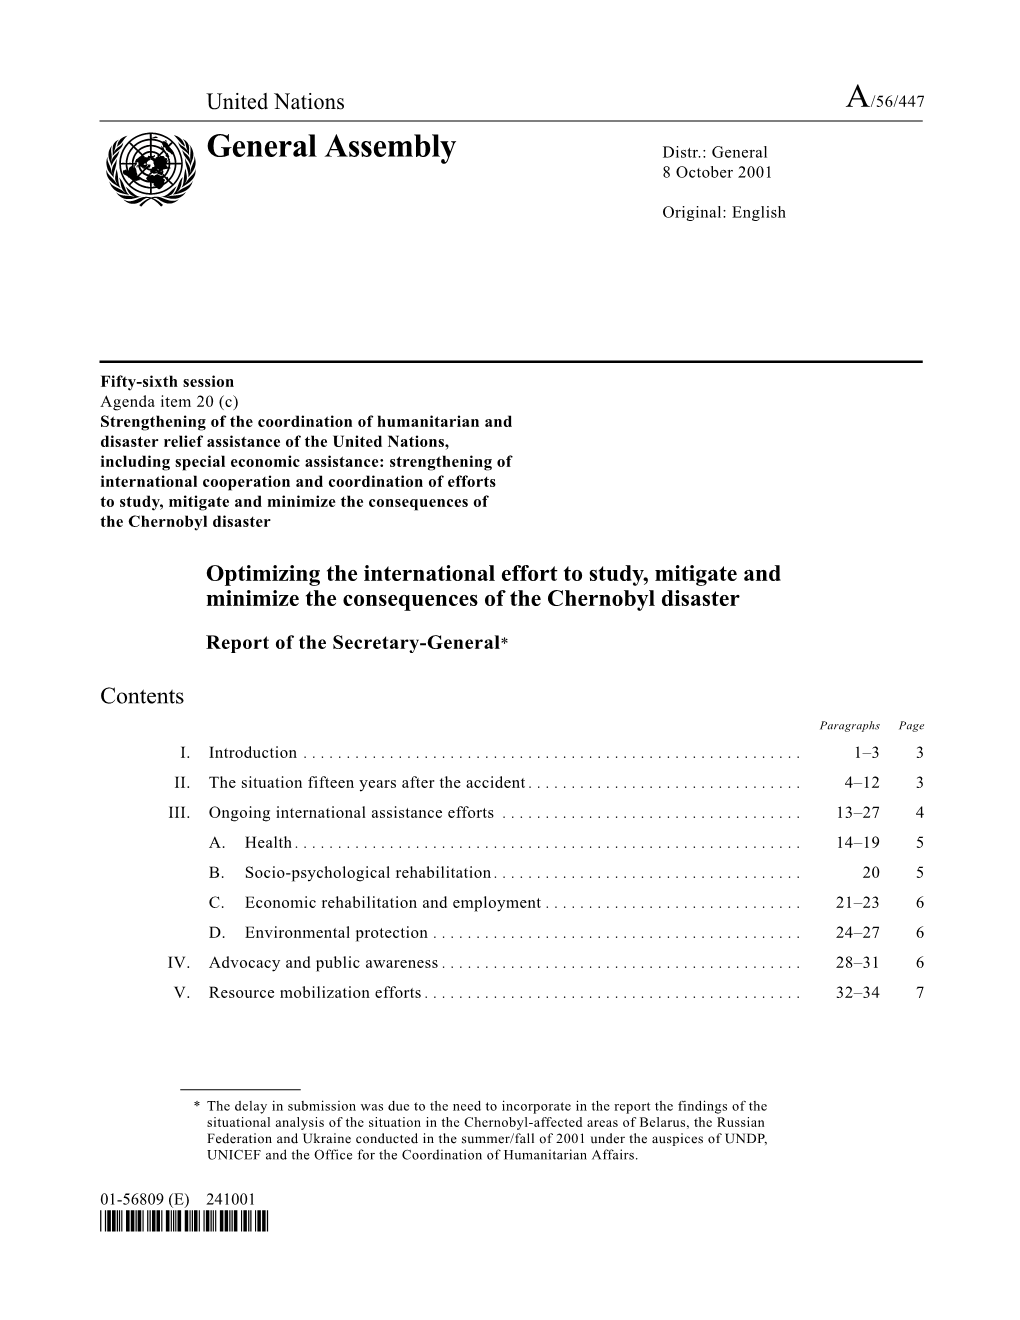 International Efforts Regarding Chernobyl, UNGA Report, 8 October 2001